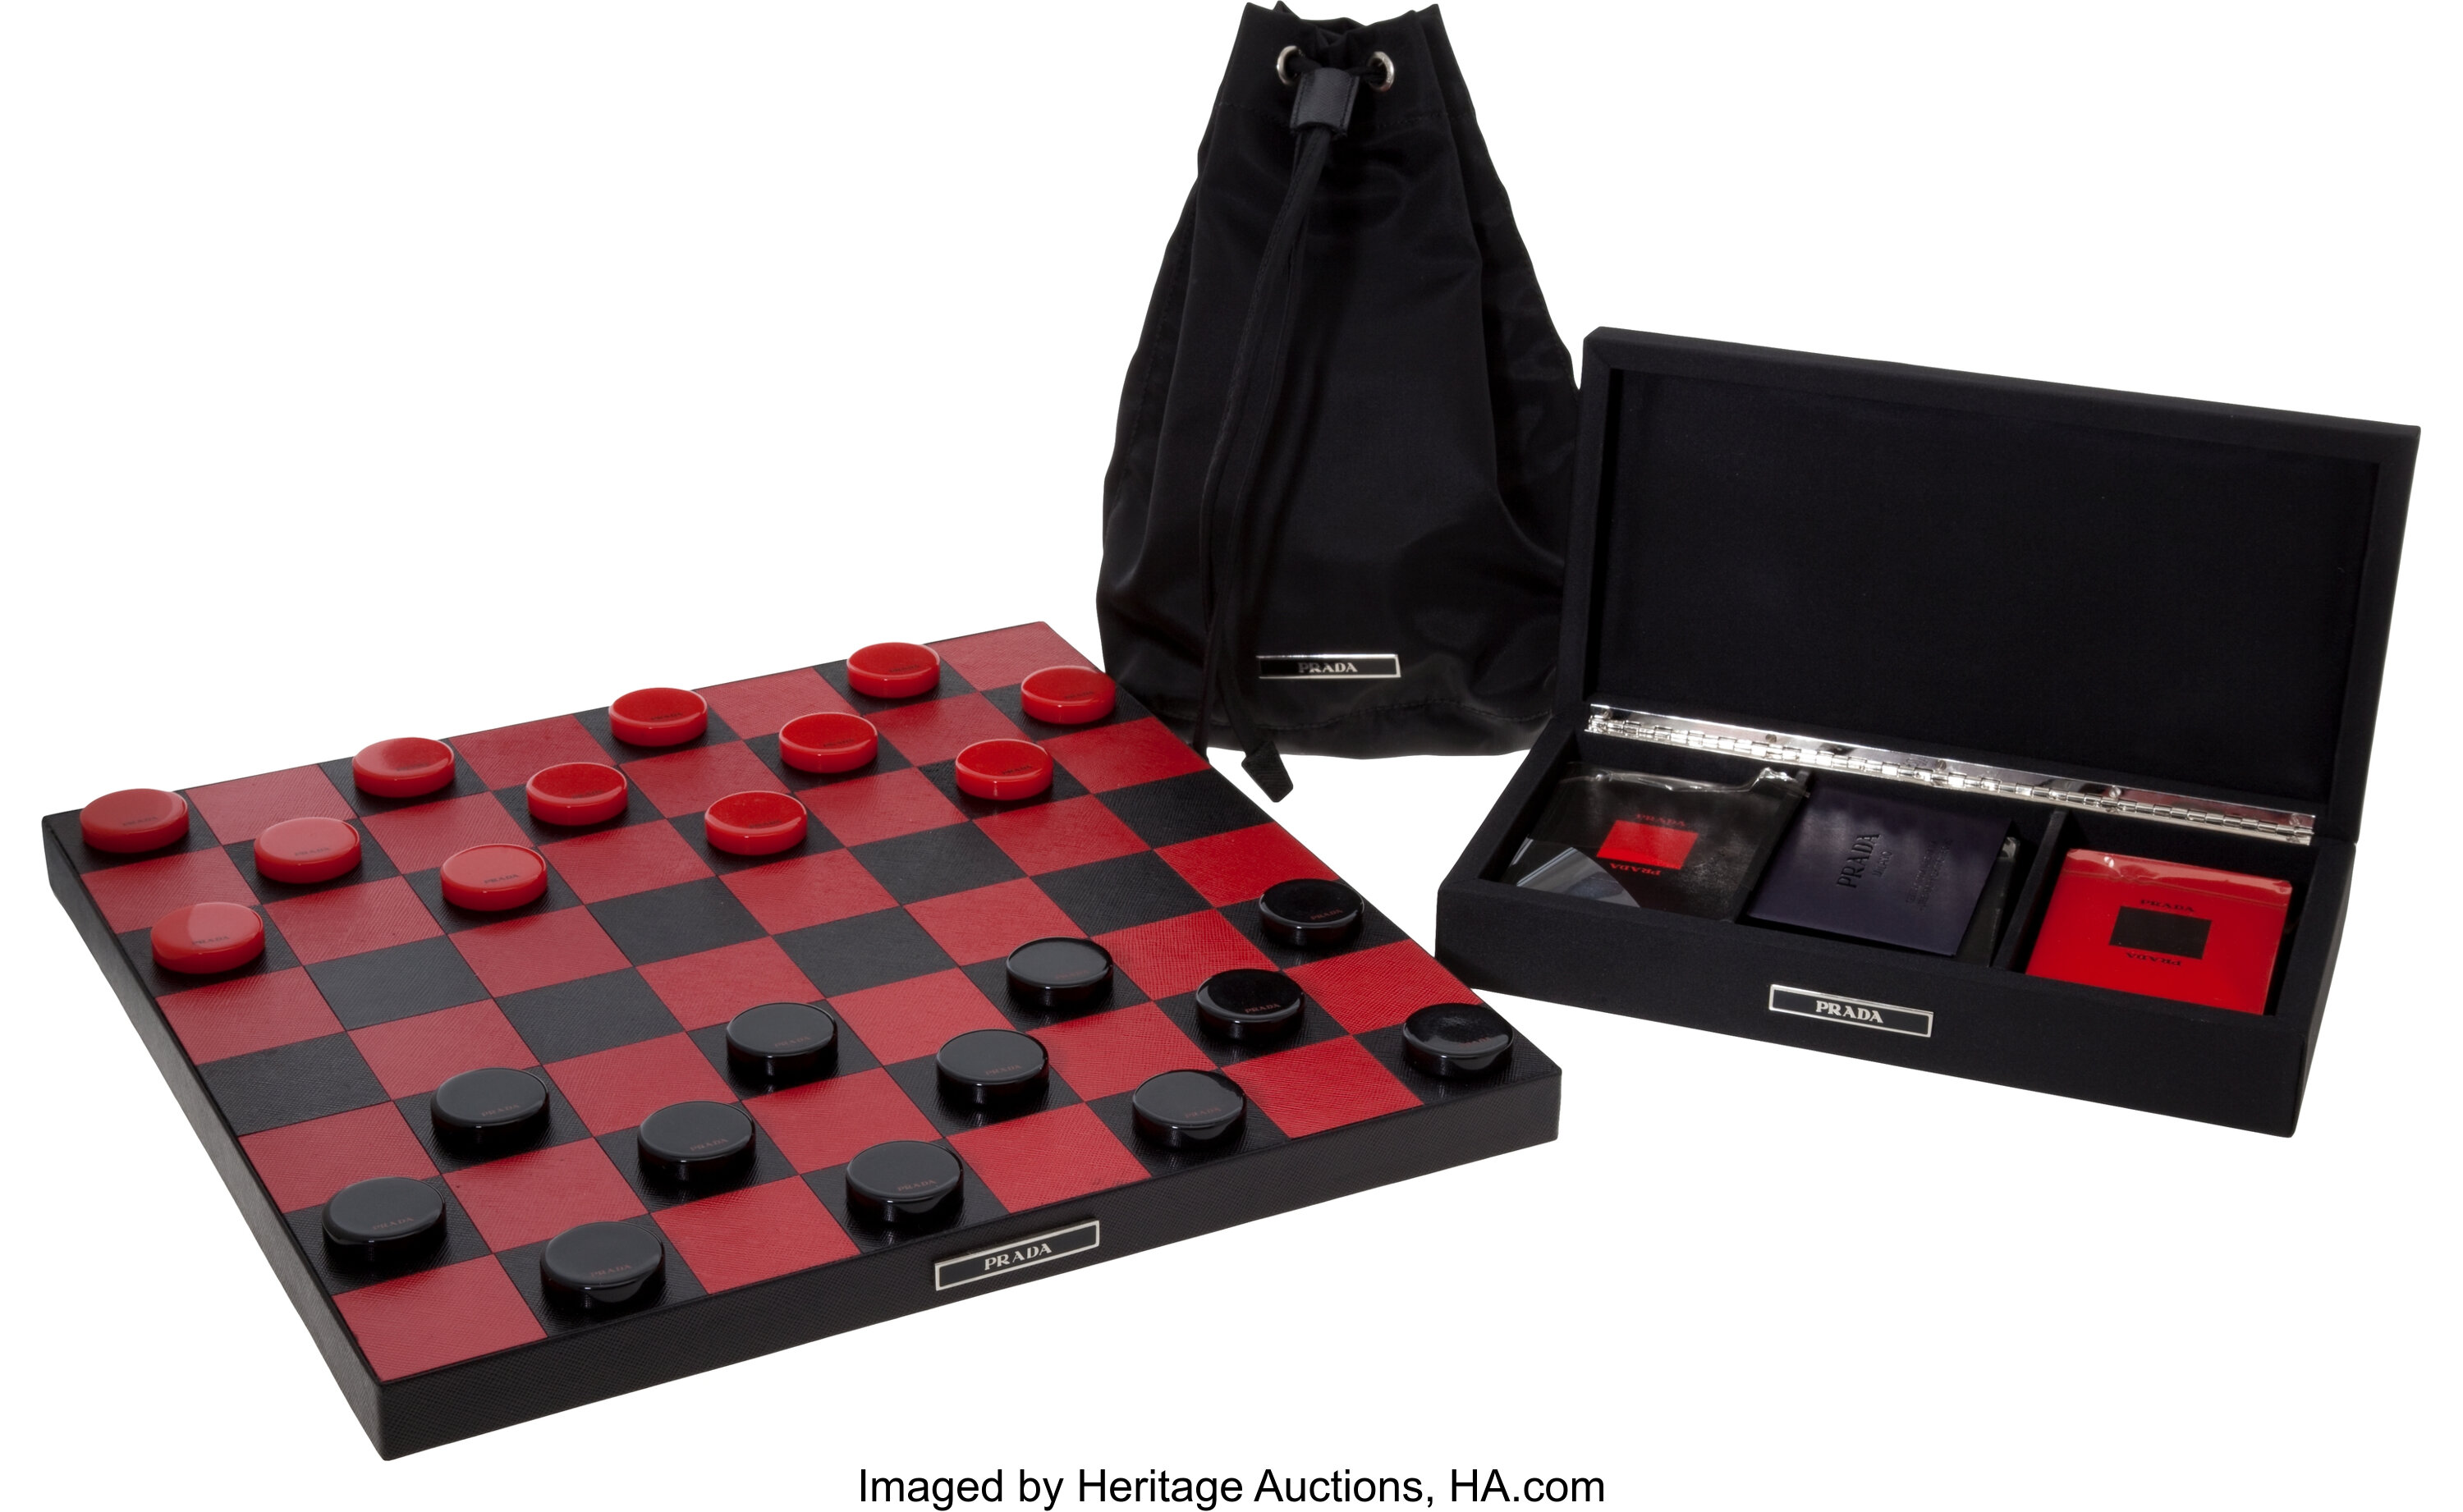 Prada chess set $3,650  Prada gifts, Board games, Stylish gifts